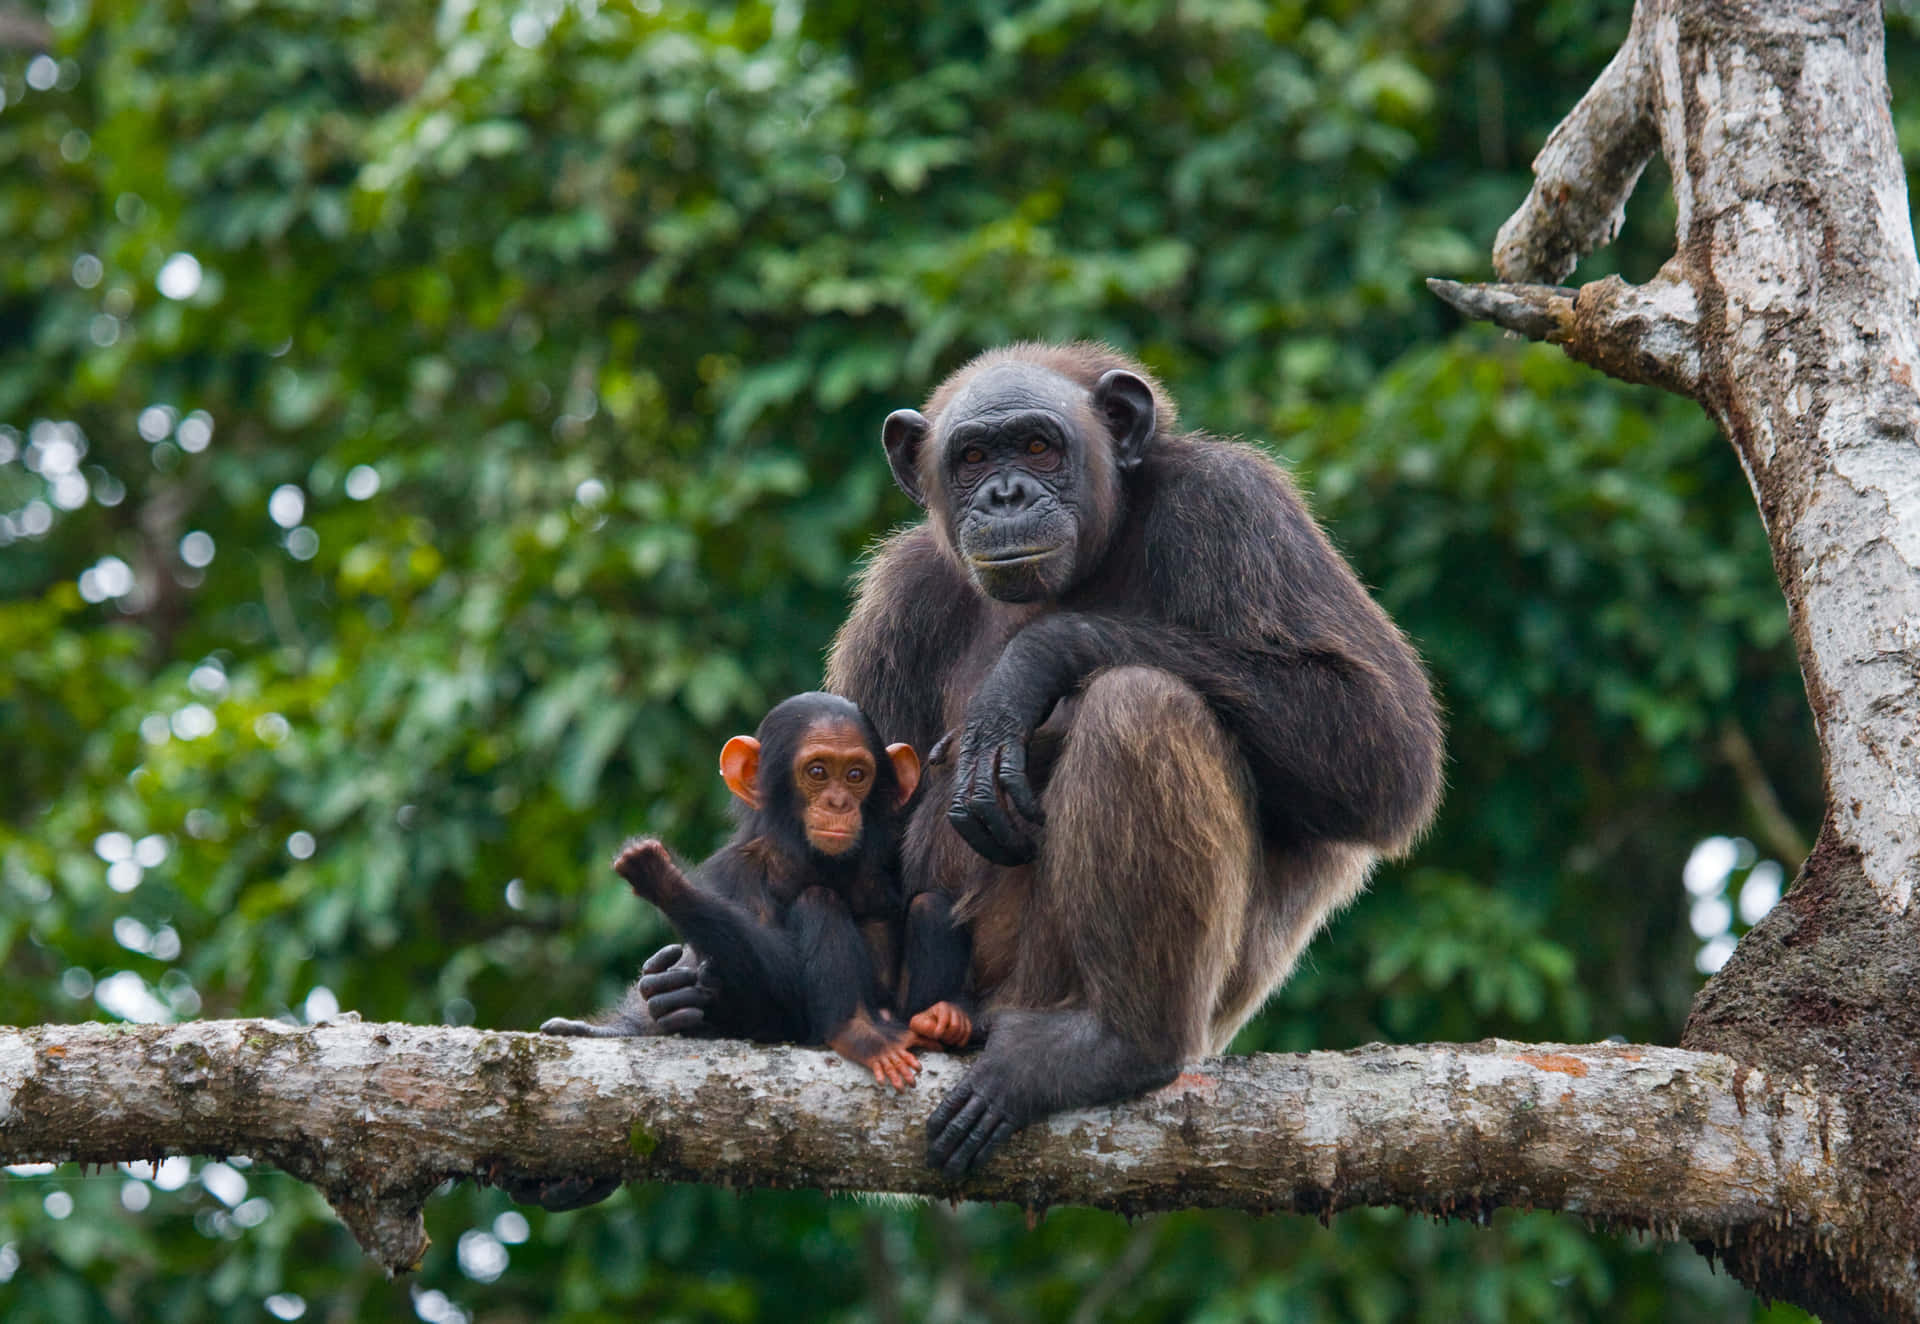 A fun and friendly Chimpanzee enjoying a peaceful moment.